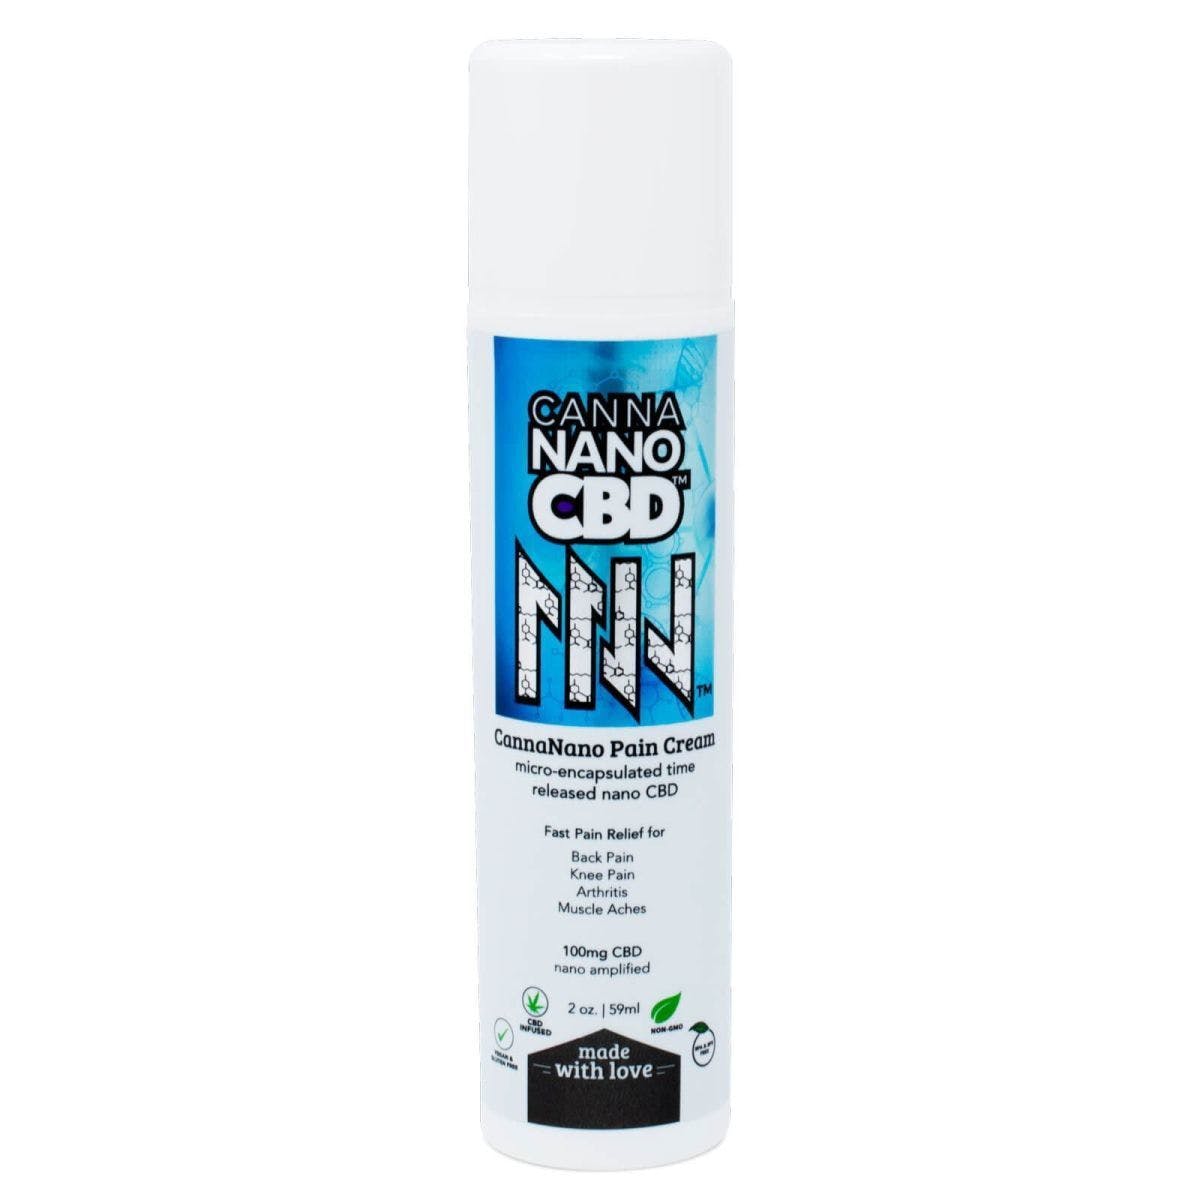 topicals-canna-nano-cbd-canna-nano-pain-cream-100mg